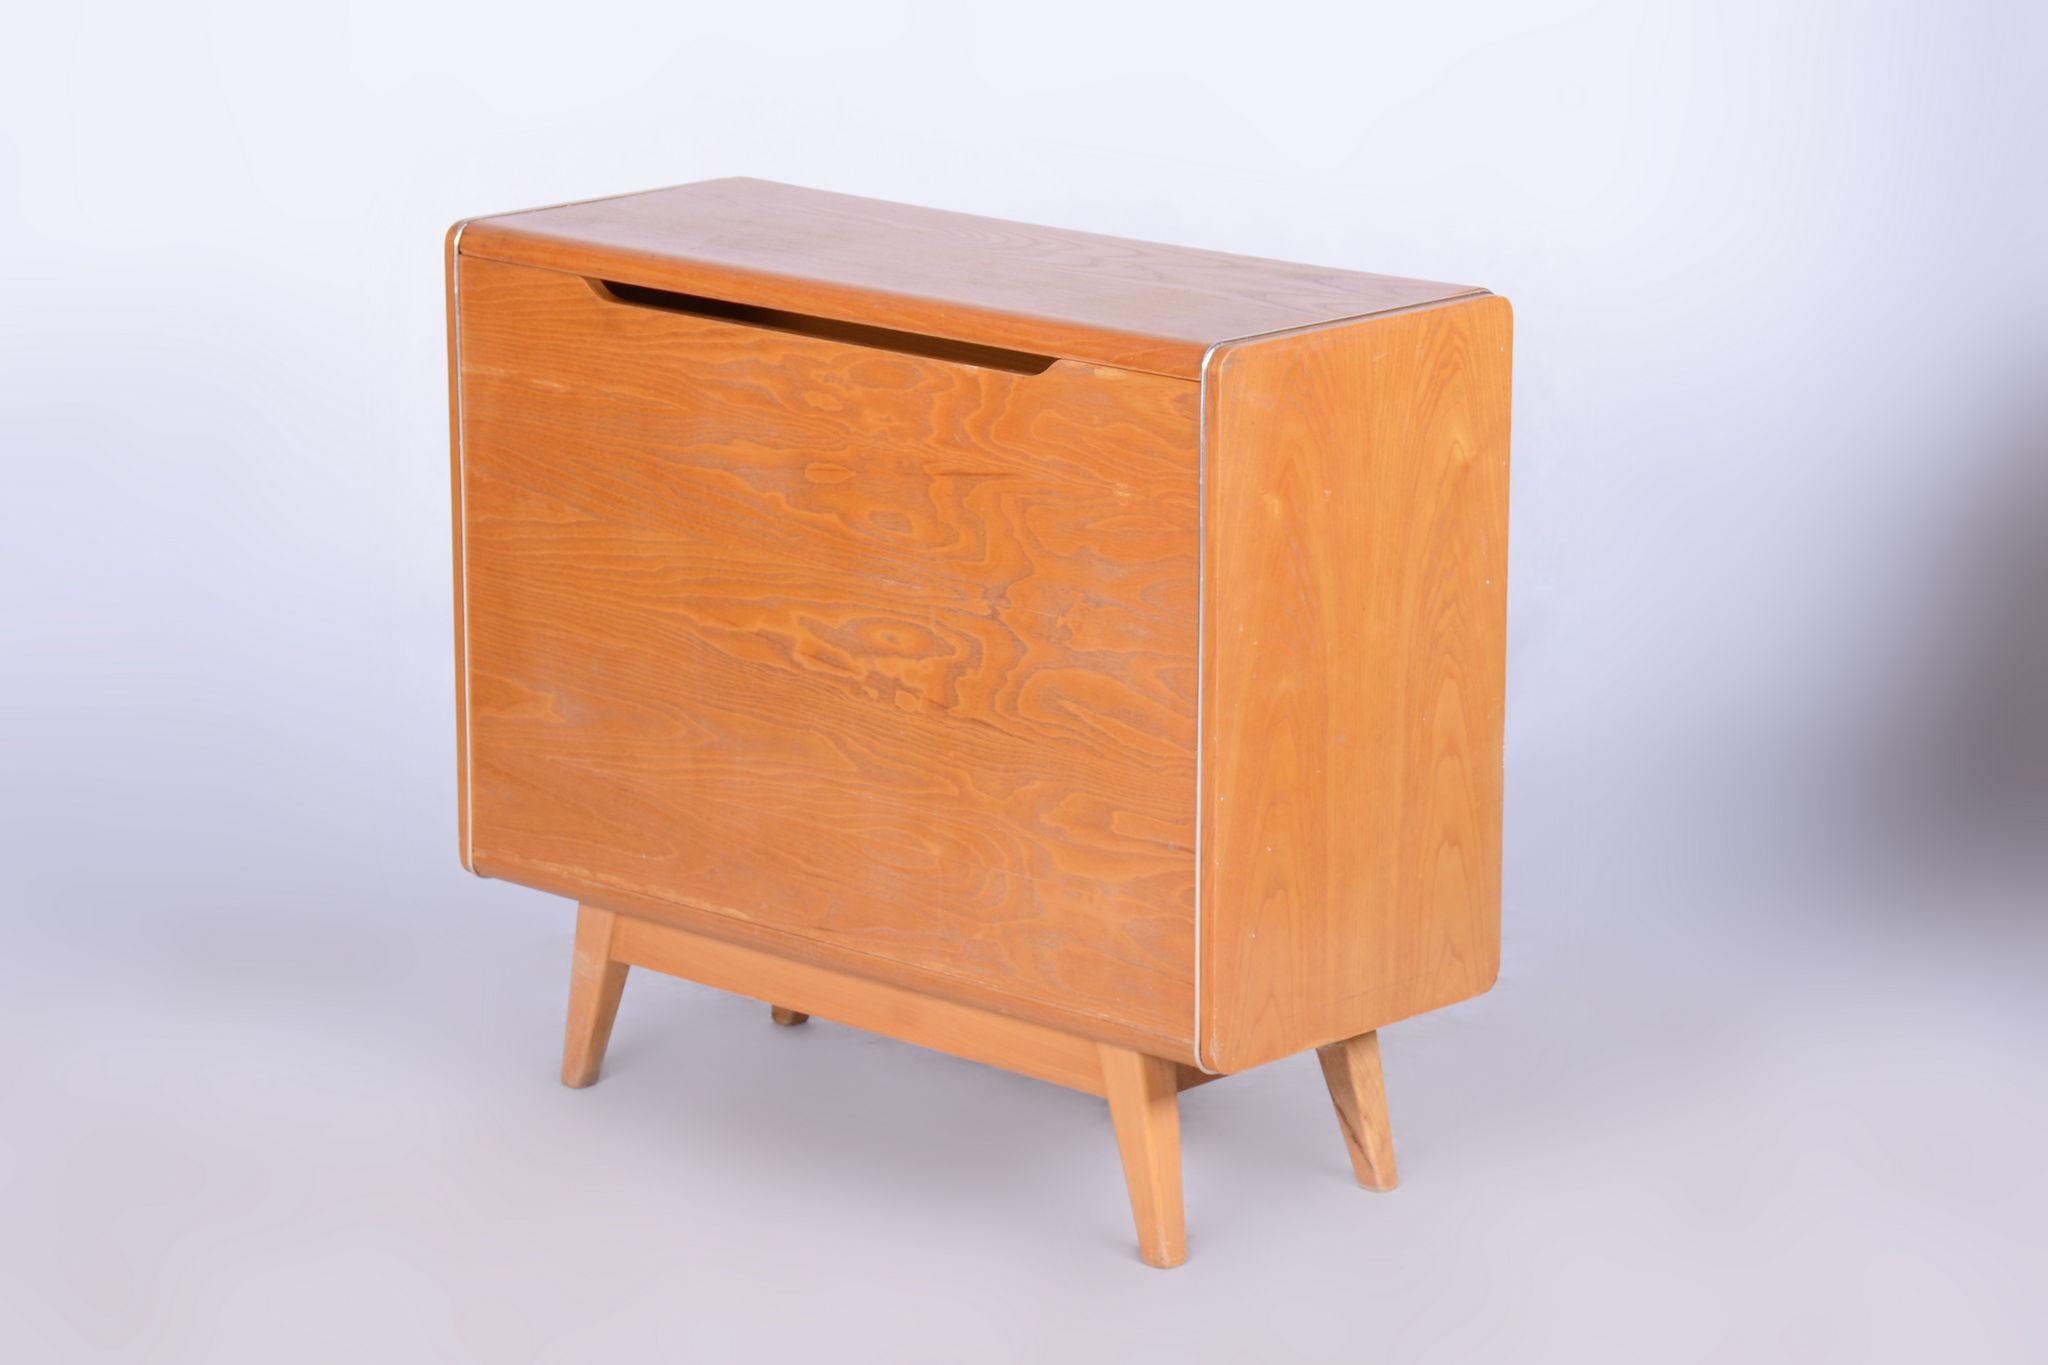 Restored Midcentury Hinged Storage Cabinet, Ash, Jitona Sobeslav, Czechia, 1950s In Good Condition For Sale In Horomerice, CZ